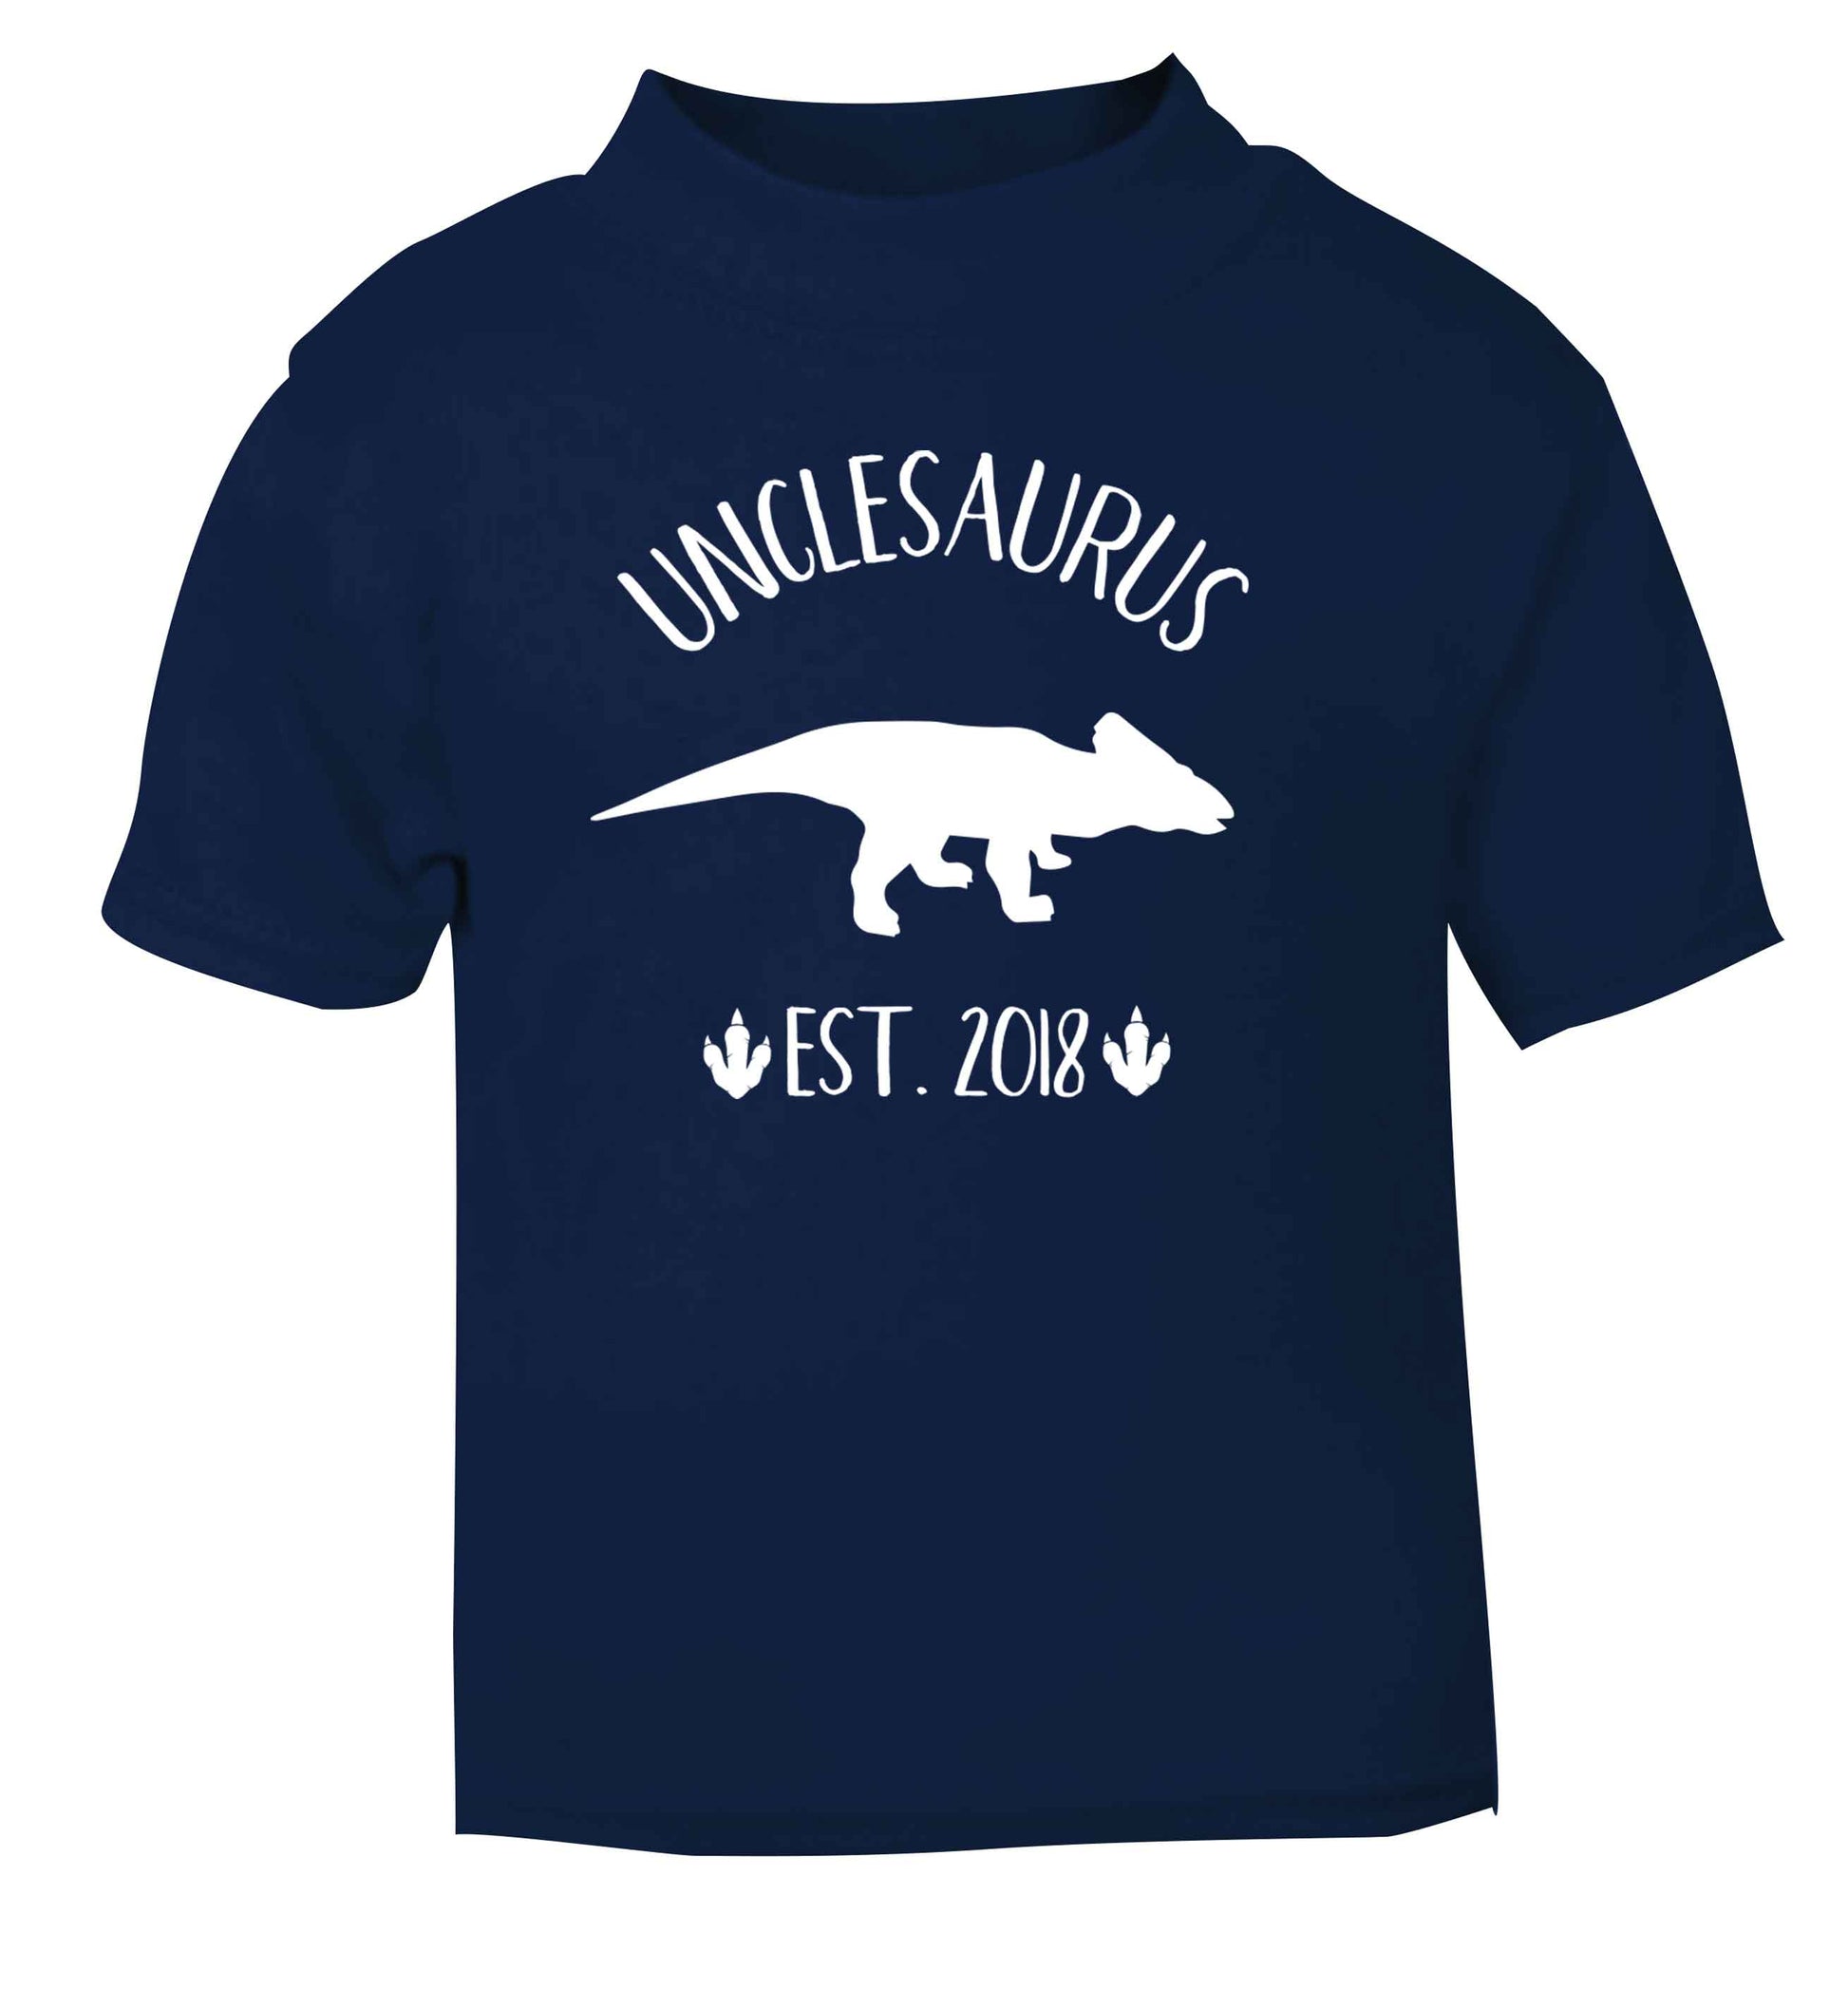 Personalised unclesaurus since (custom date) navy Baby Toddler Tshirt 2 Years